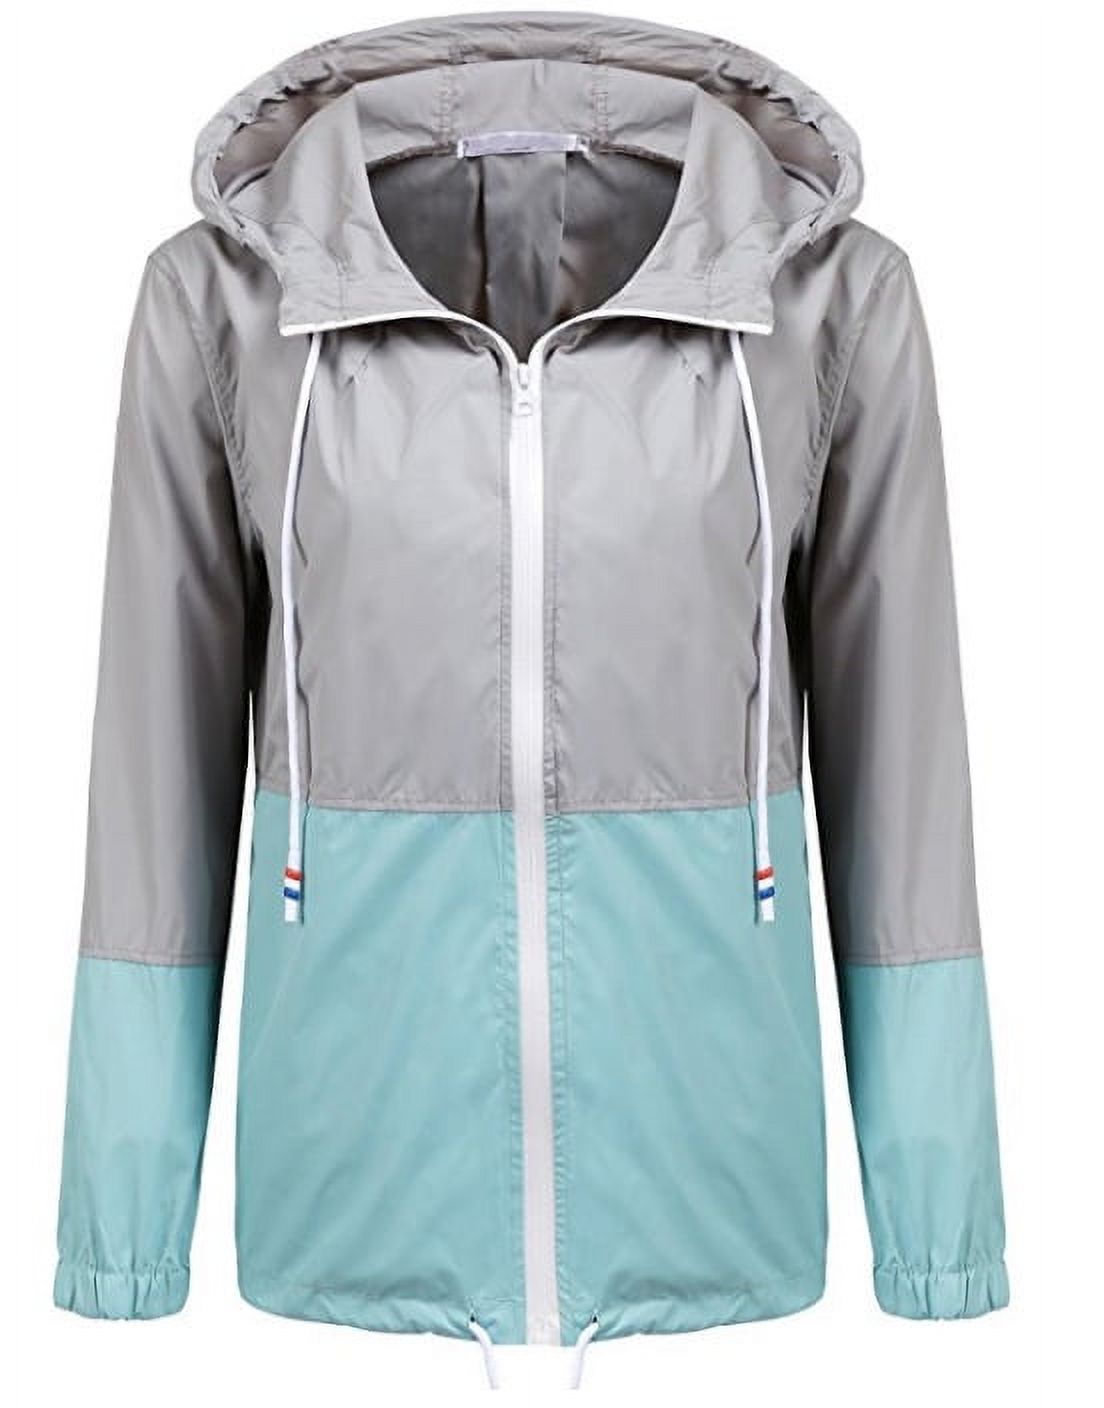 Springcmy Women´s Waterproof Raincoat Outdoor Hooded Rain Jacket Windbreaker - image 1 of 3